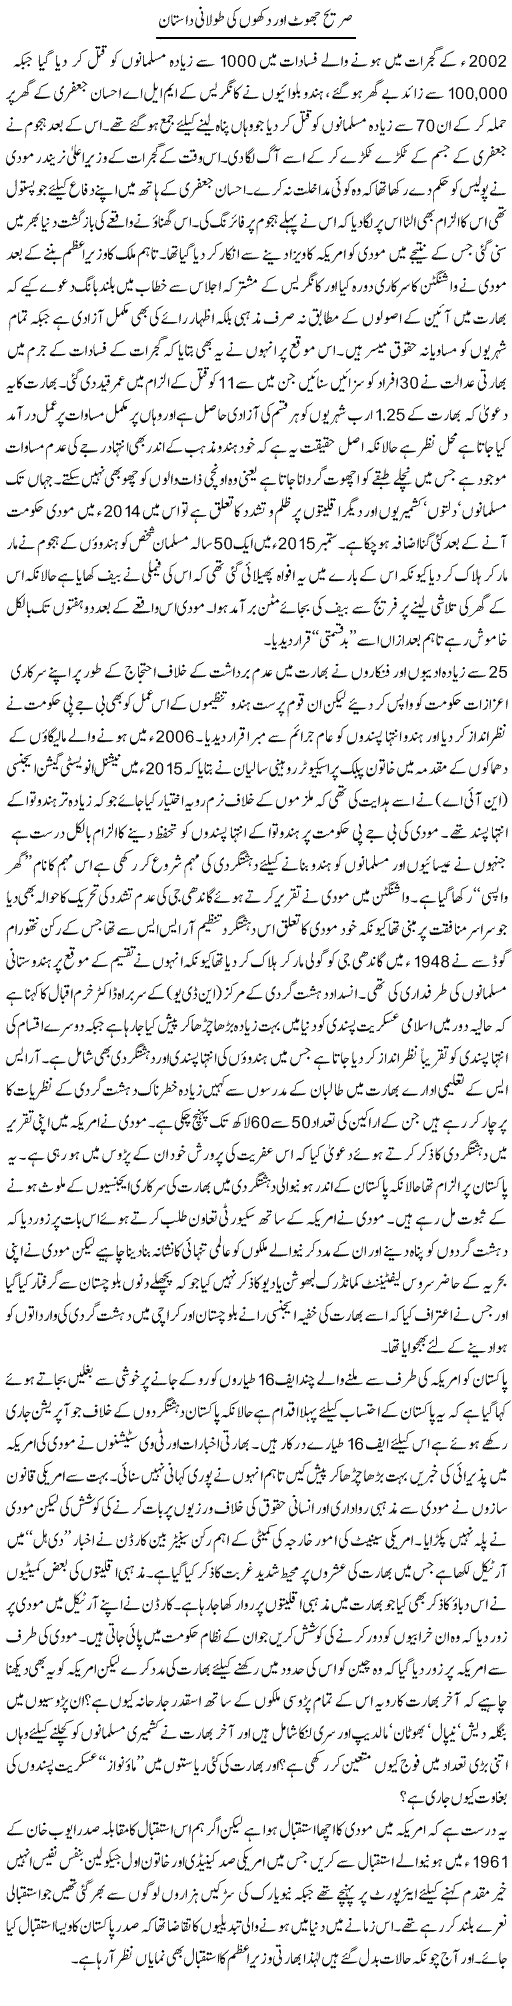 Sareeh jhoot aur dukhoon ki Tulani daastaan | Ikram Sehgal | Daily Urdu Columns